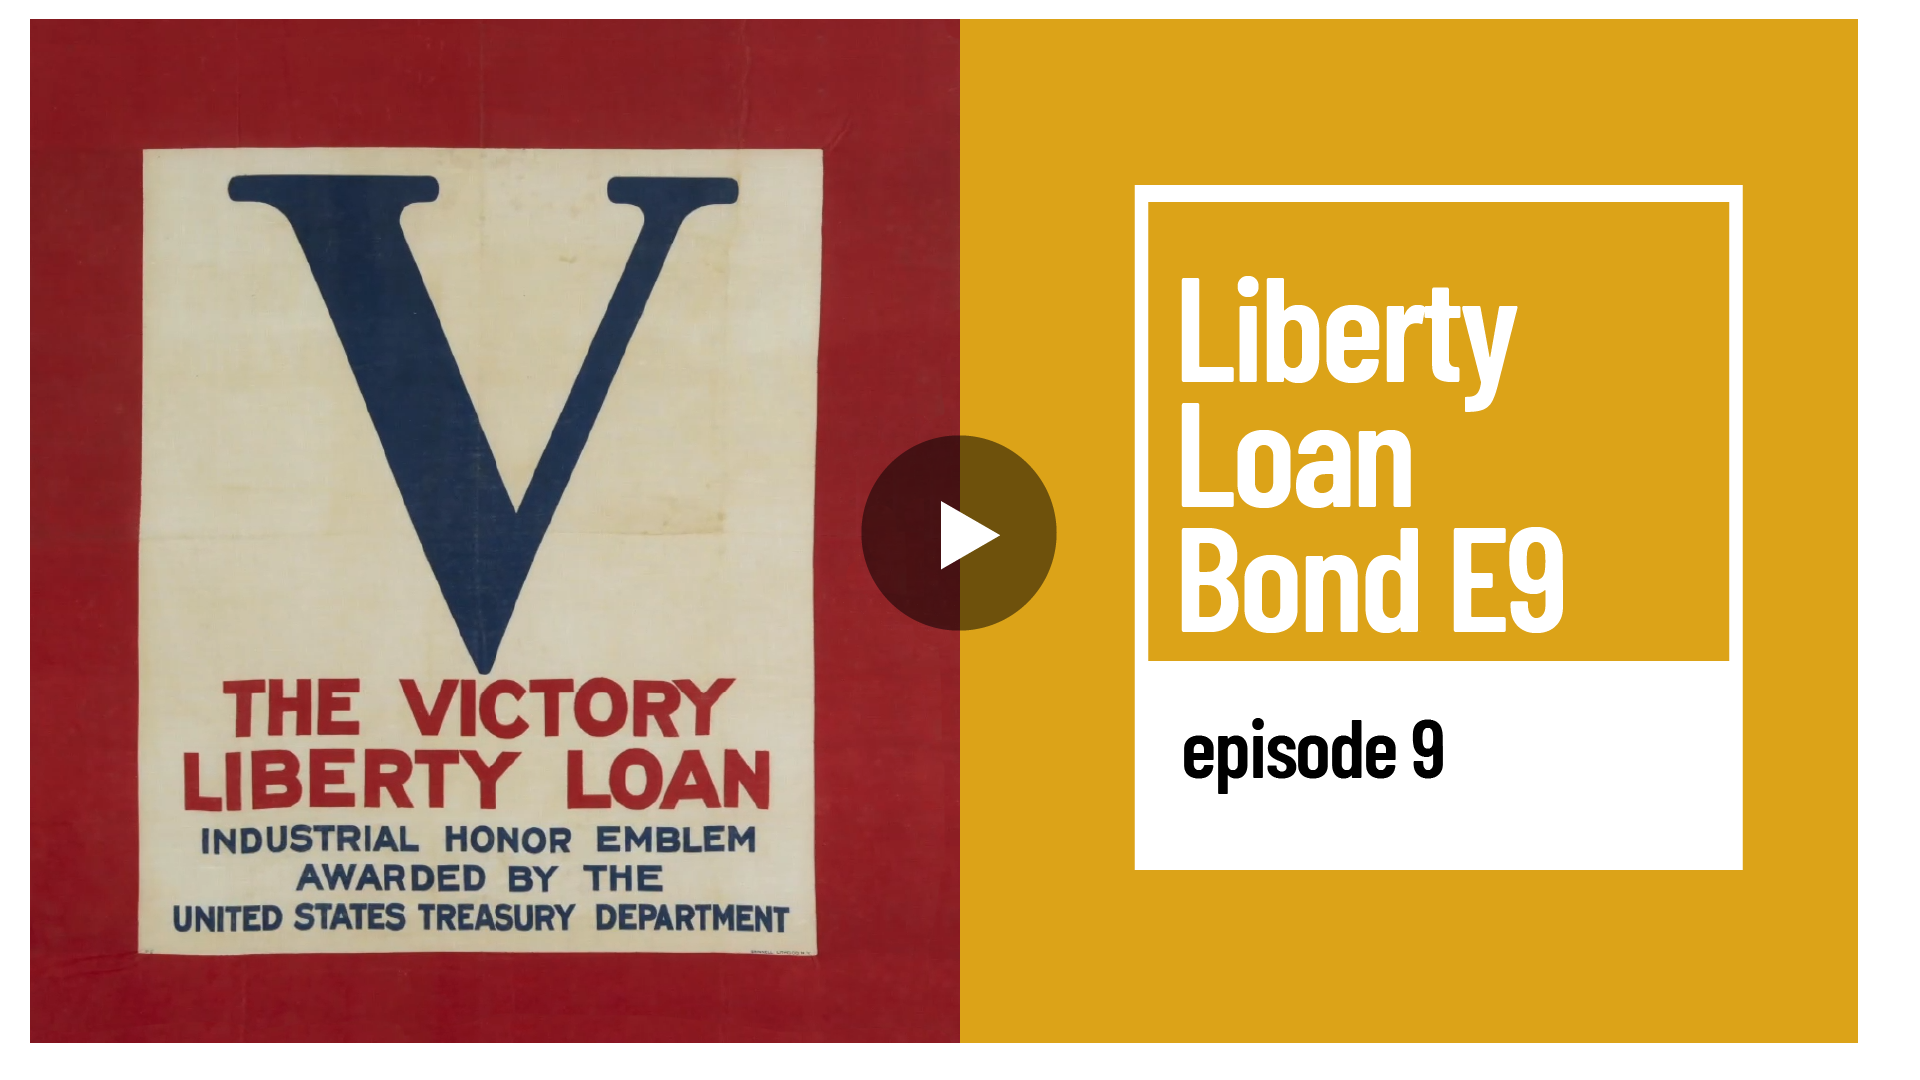 Image of the Liberty Loan Bond